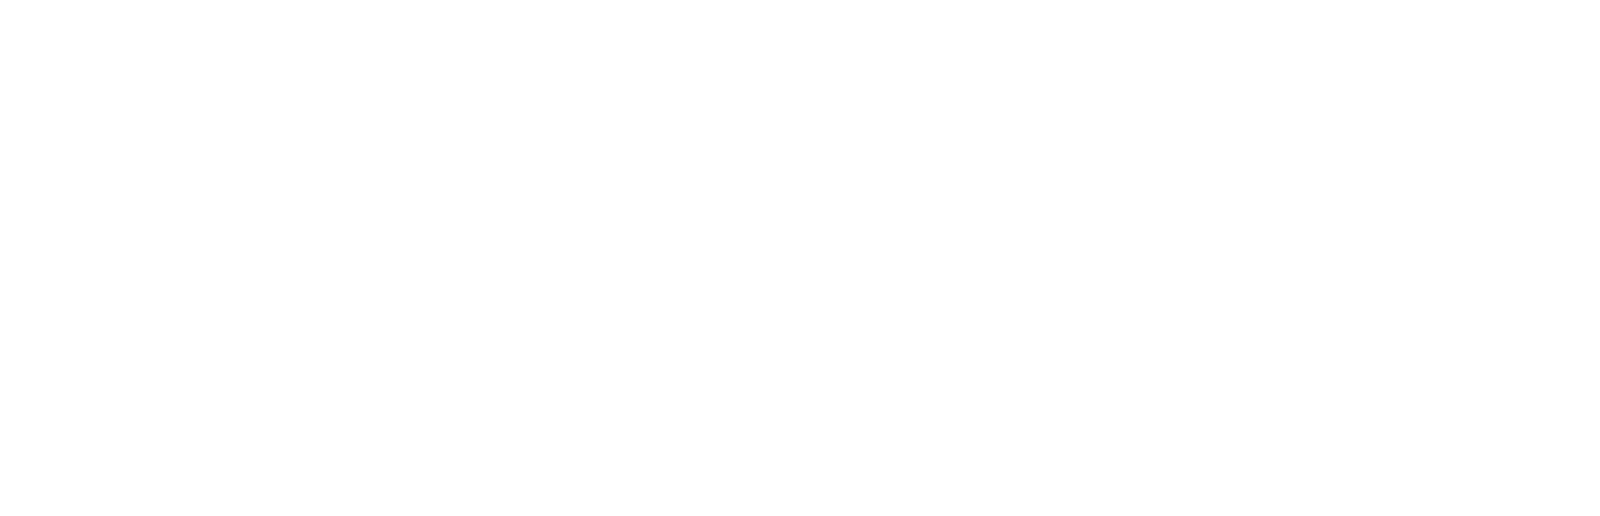 nova scotia power logo white)